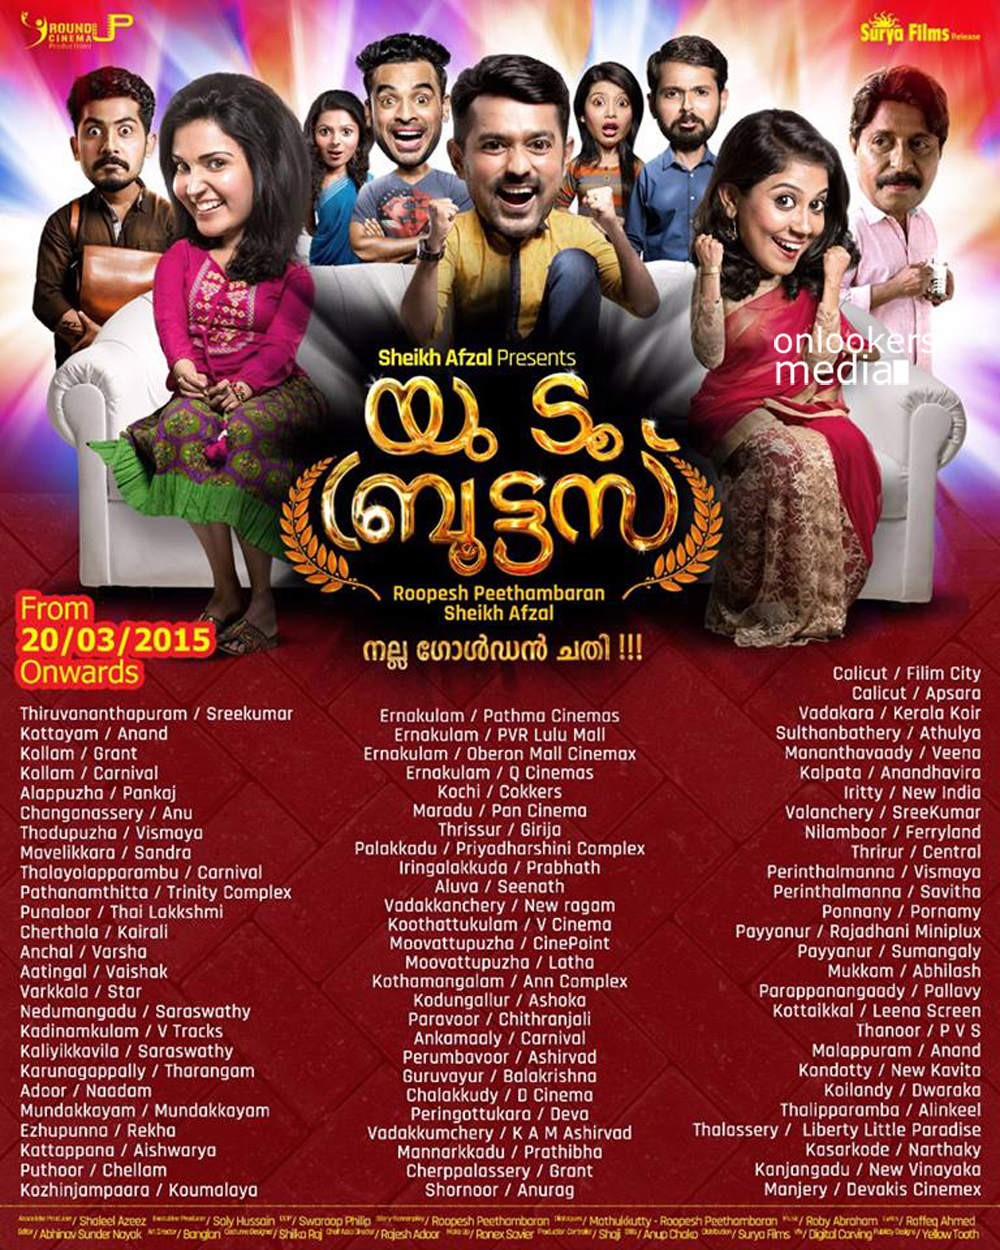 https://onlookersmedia.in/wp-content/uploads/2015/01/You-Too-Brutus-Theater-List-Malayalam-Movie-2015-Asif-Ali-Honey-Rose-Sreenivasan-Tovino-Thomas-Onlookers-Media.jpg